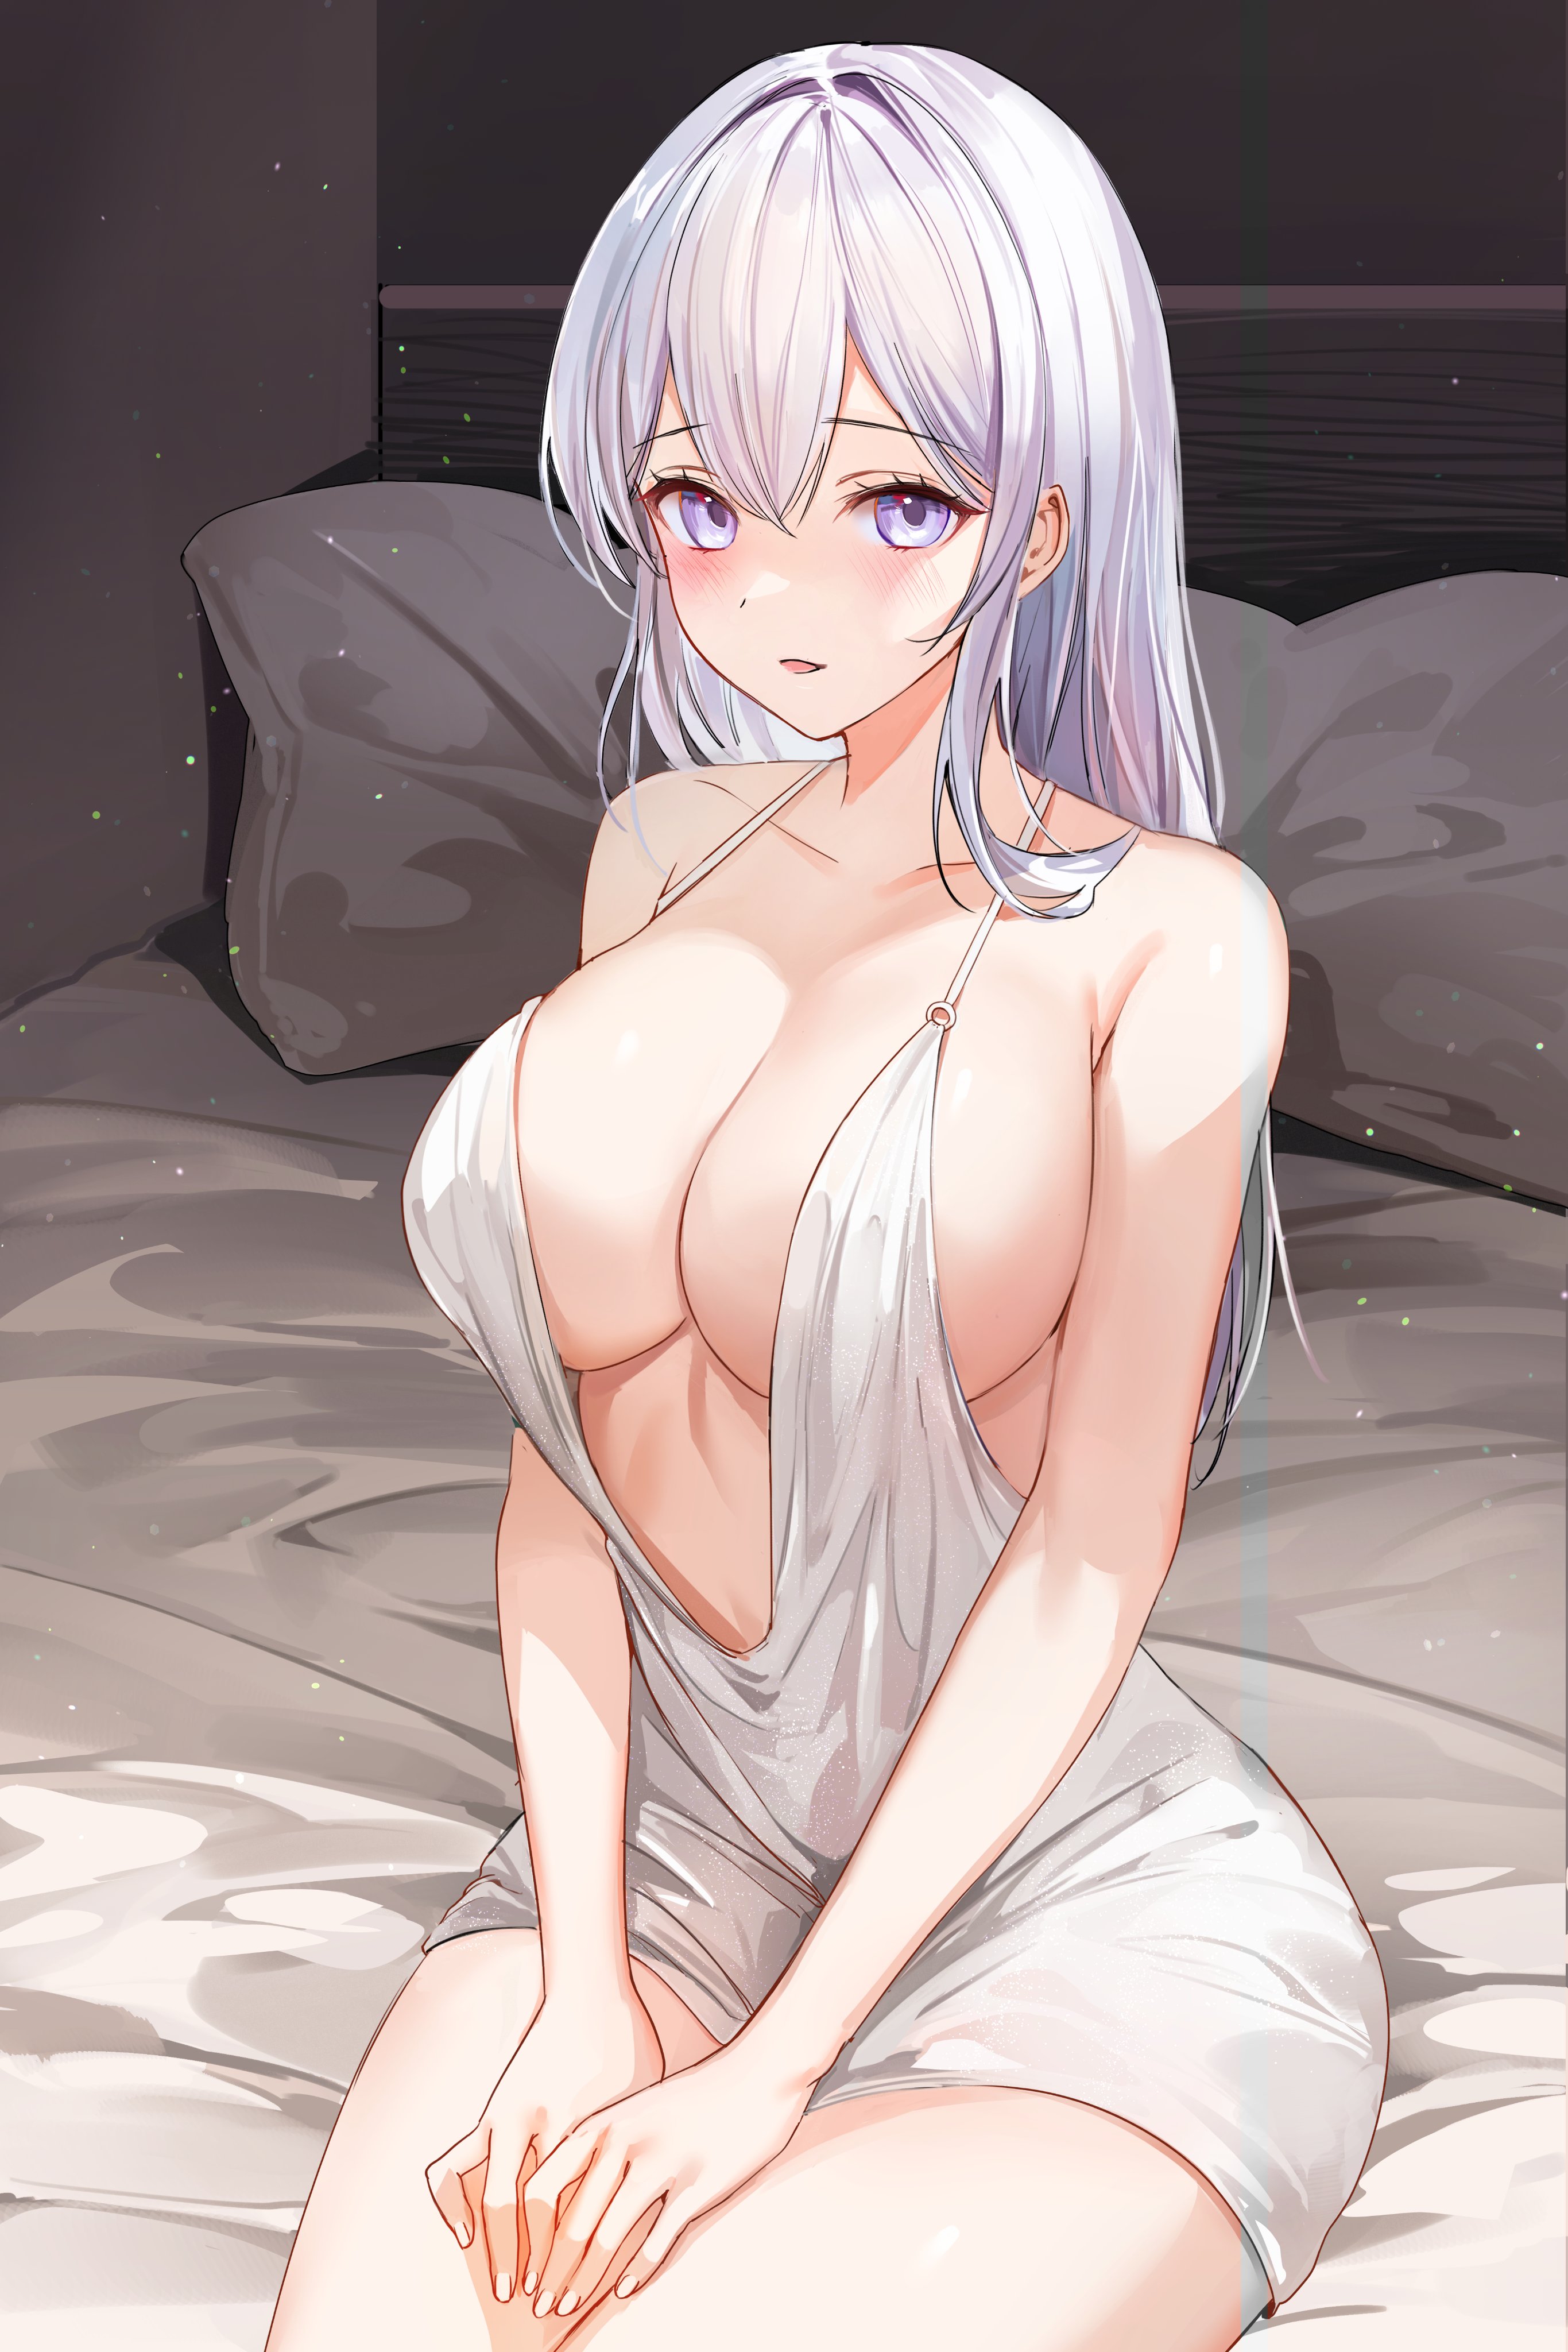 Anime 2731x4096 lillly anime girls white hair purple eyes boobs cleavage in bed white dress big boobs no bra